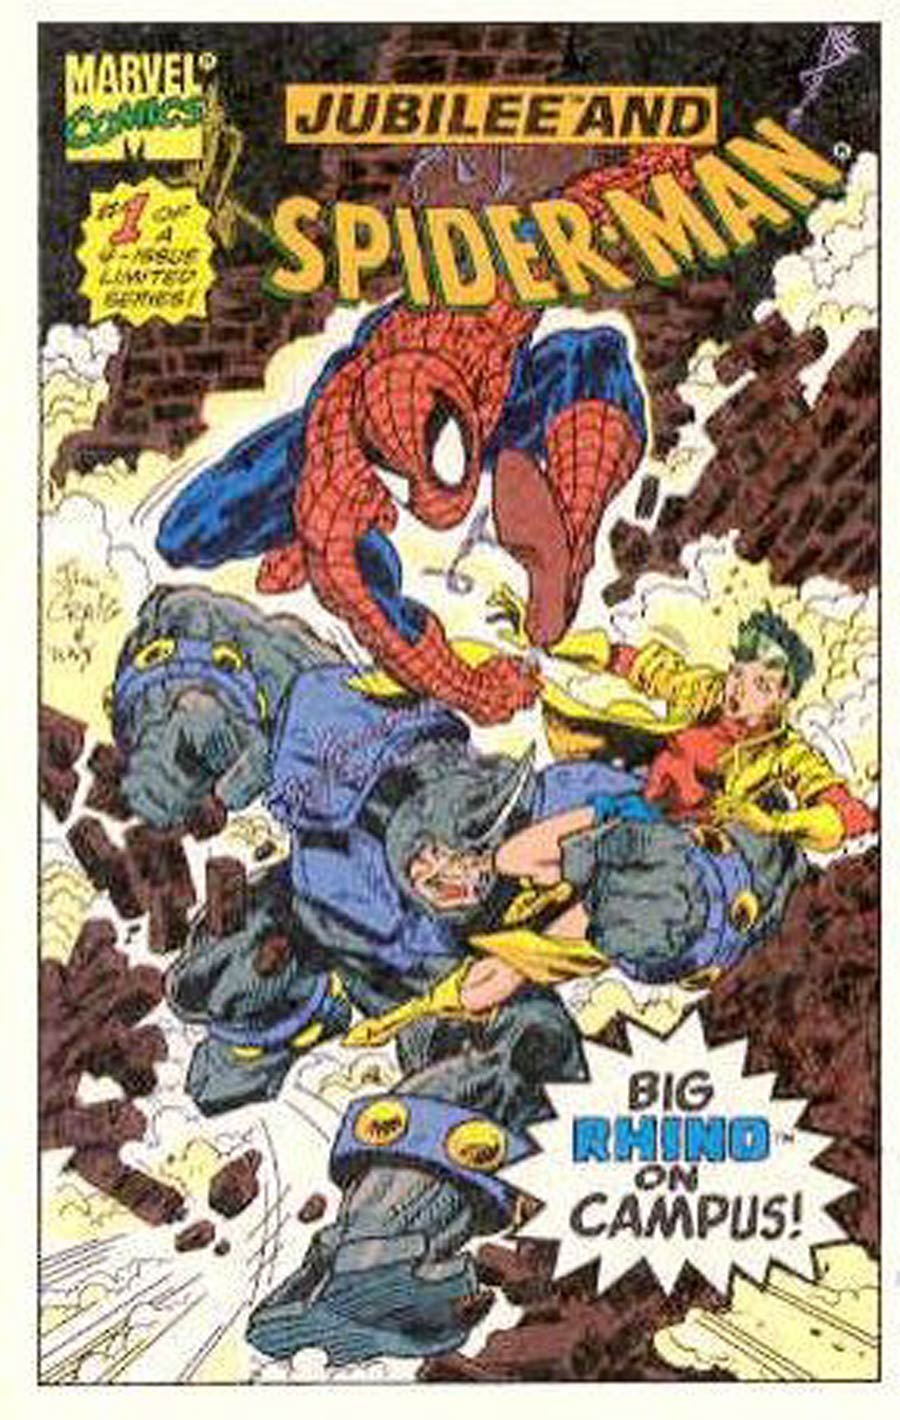 Spider-Man Drakes Cakes Mini Comic Book (1993) #1 Jubilee